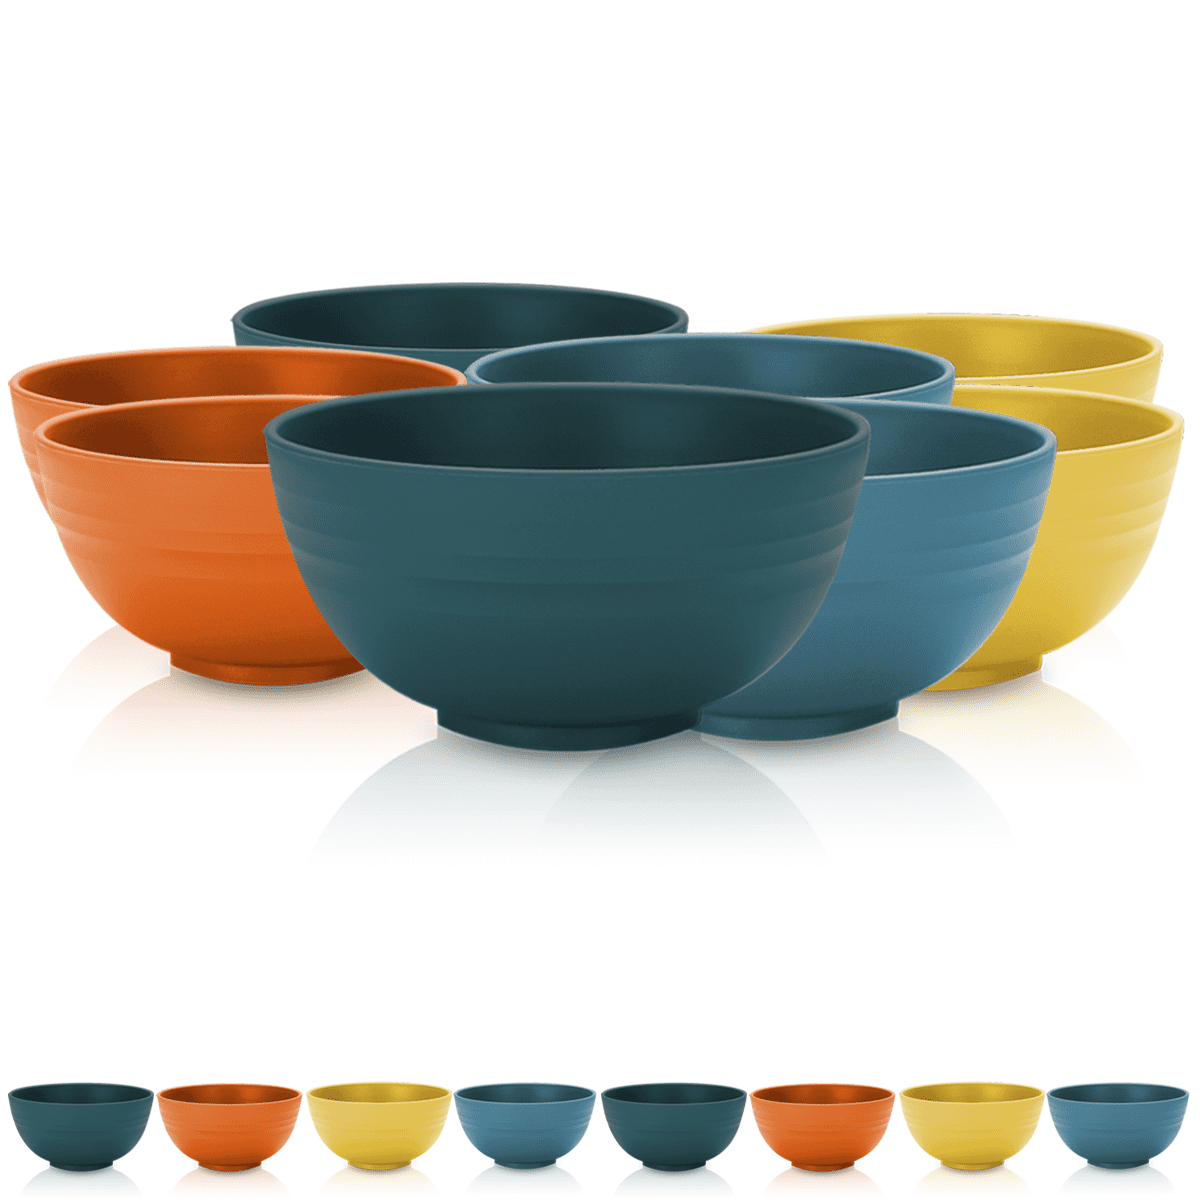 Sterilite 8-Piece Covered Bowl Set, Blue Sky Lids with White Bowls